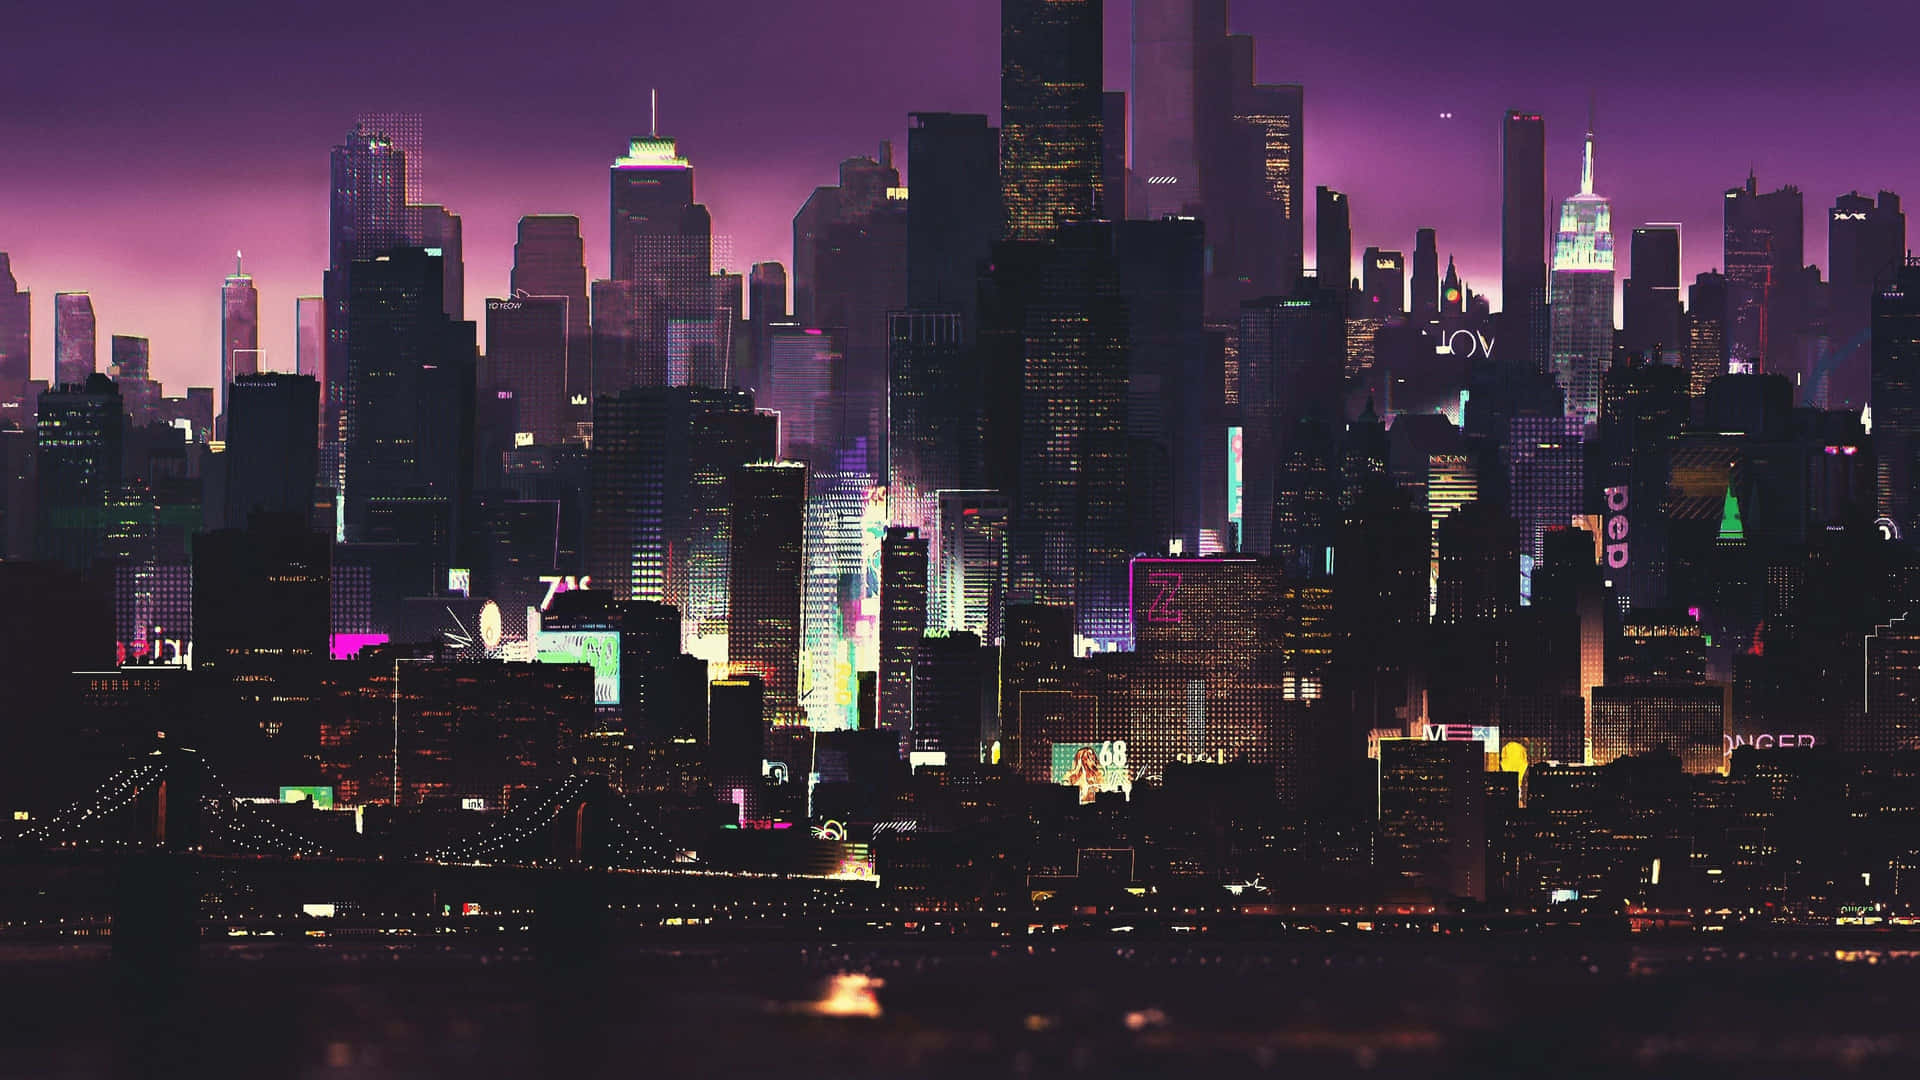 A cyberpunk cityscape depicting the futuristic landscape. Wallpaper